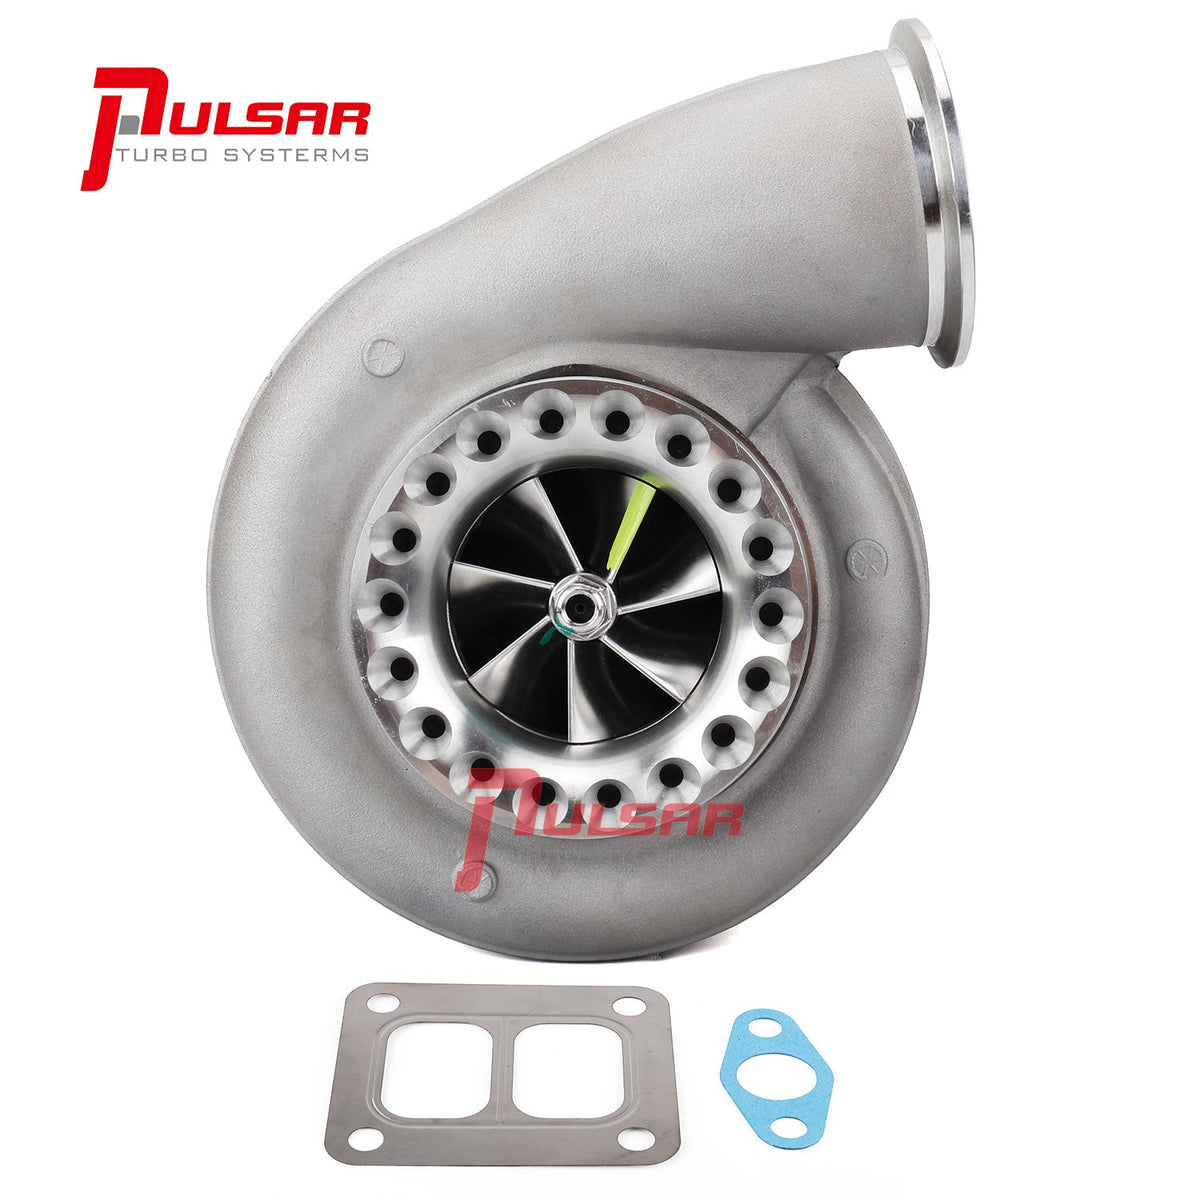 PULSAR Billet S480 Turbo with 96mm Turbine wheel – Tas Autosport